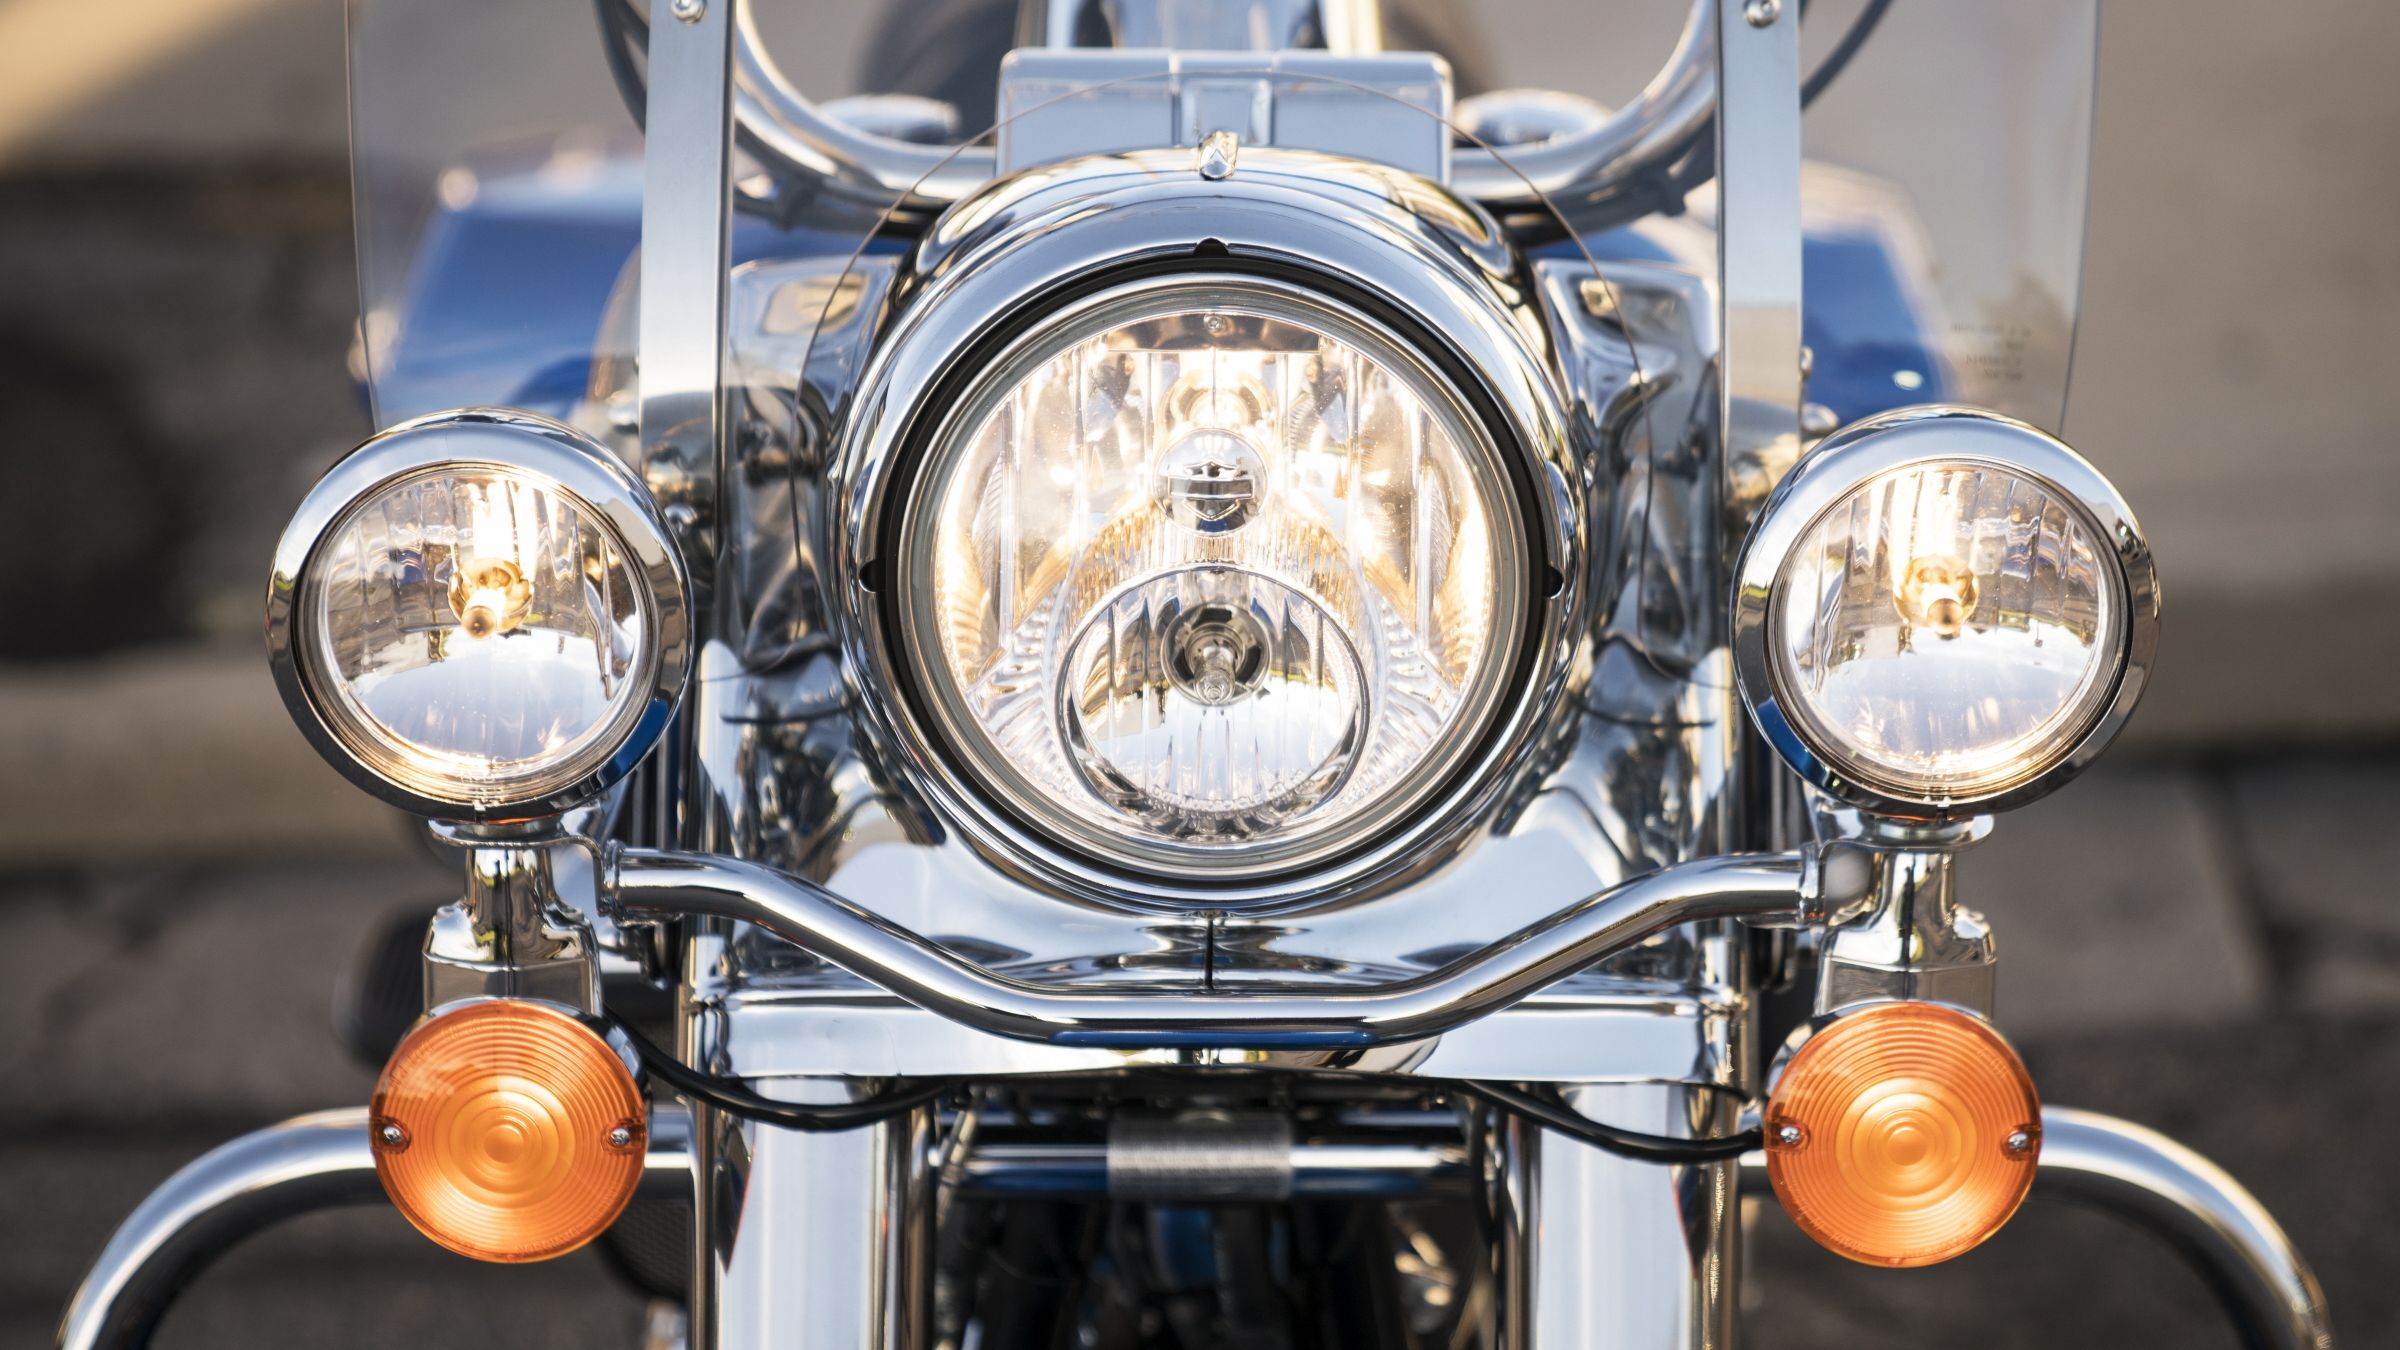 2018 - 2020 Harley-Davidson Road King / Road King Special